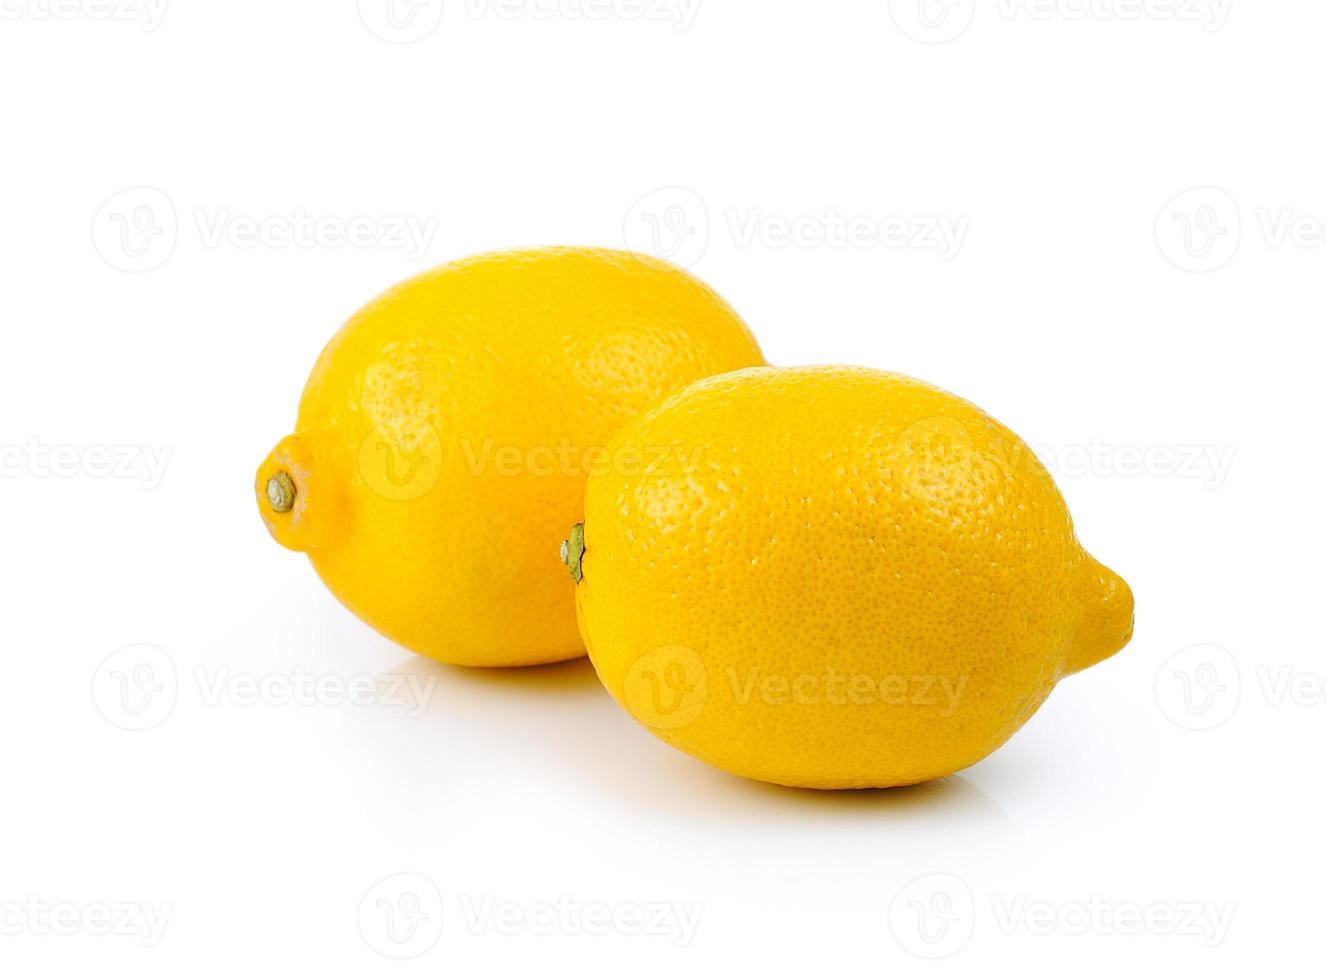 färsk citron på en vit bakgrund foto